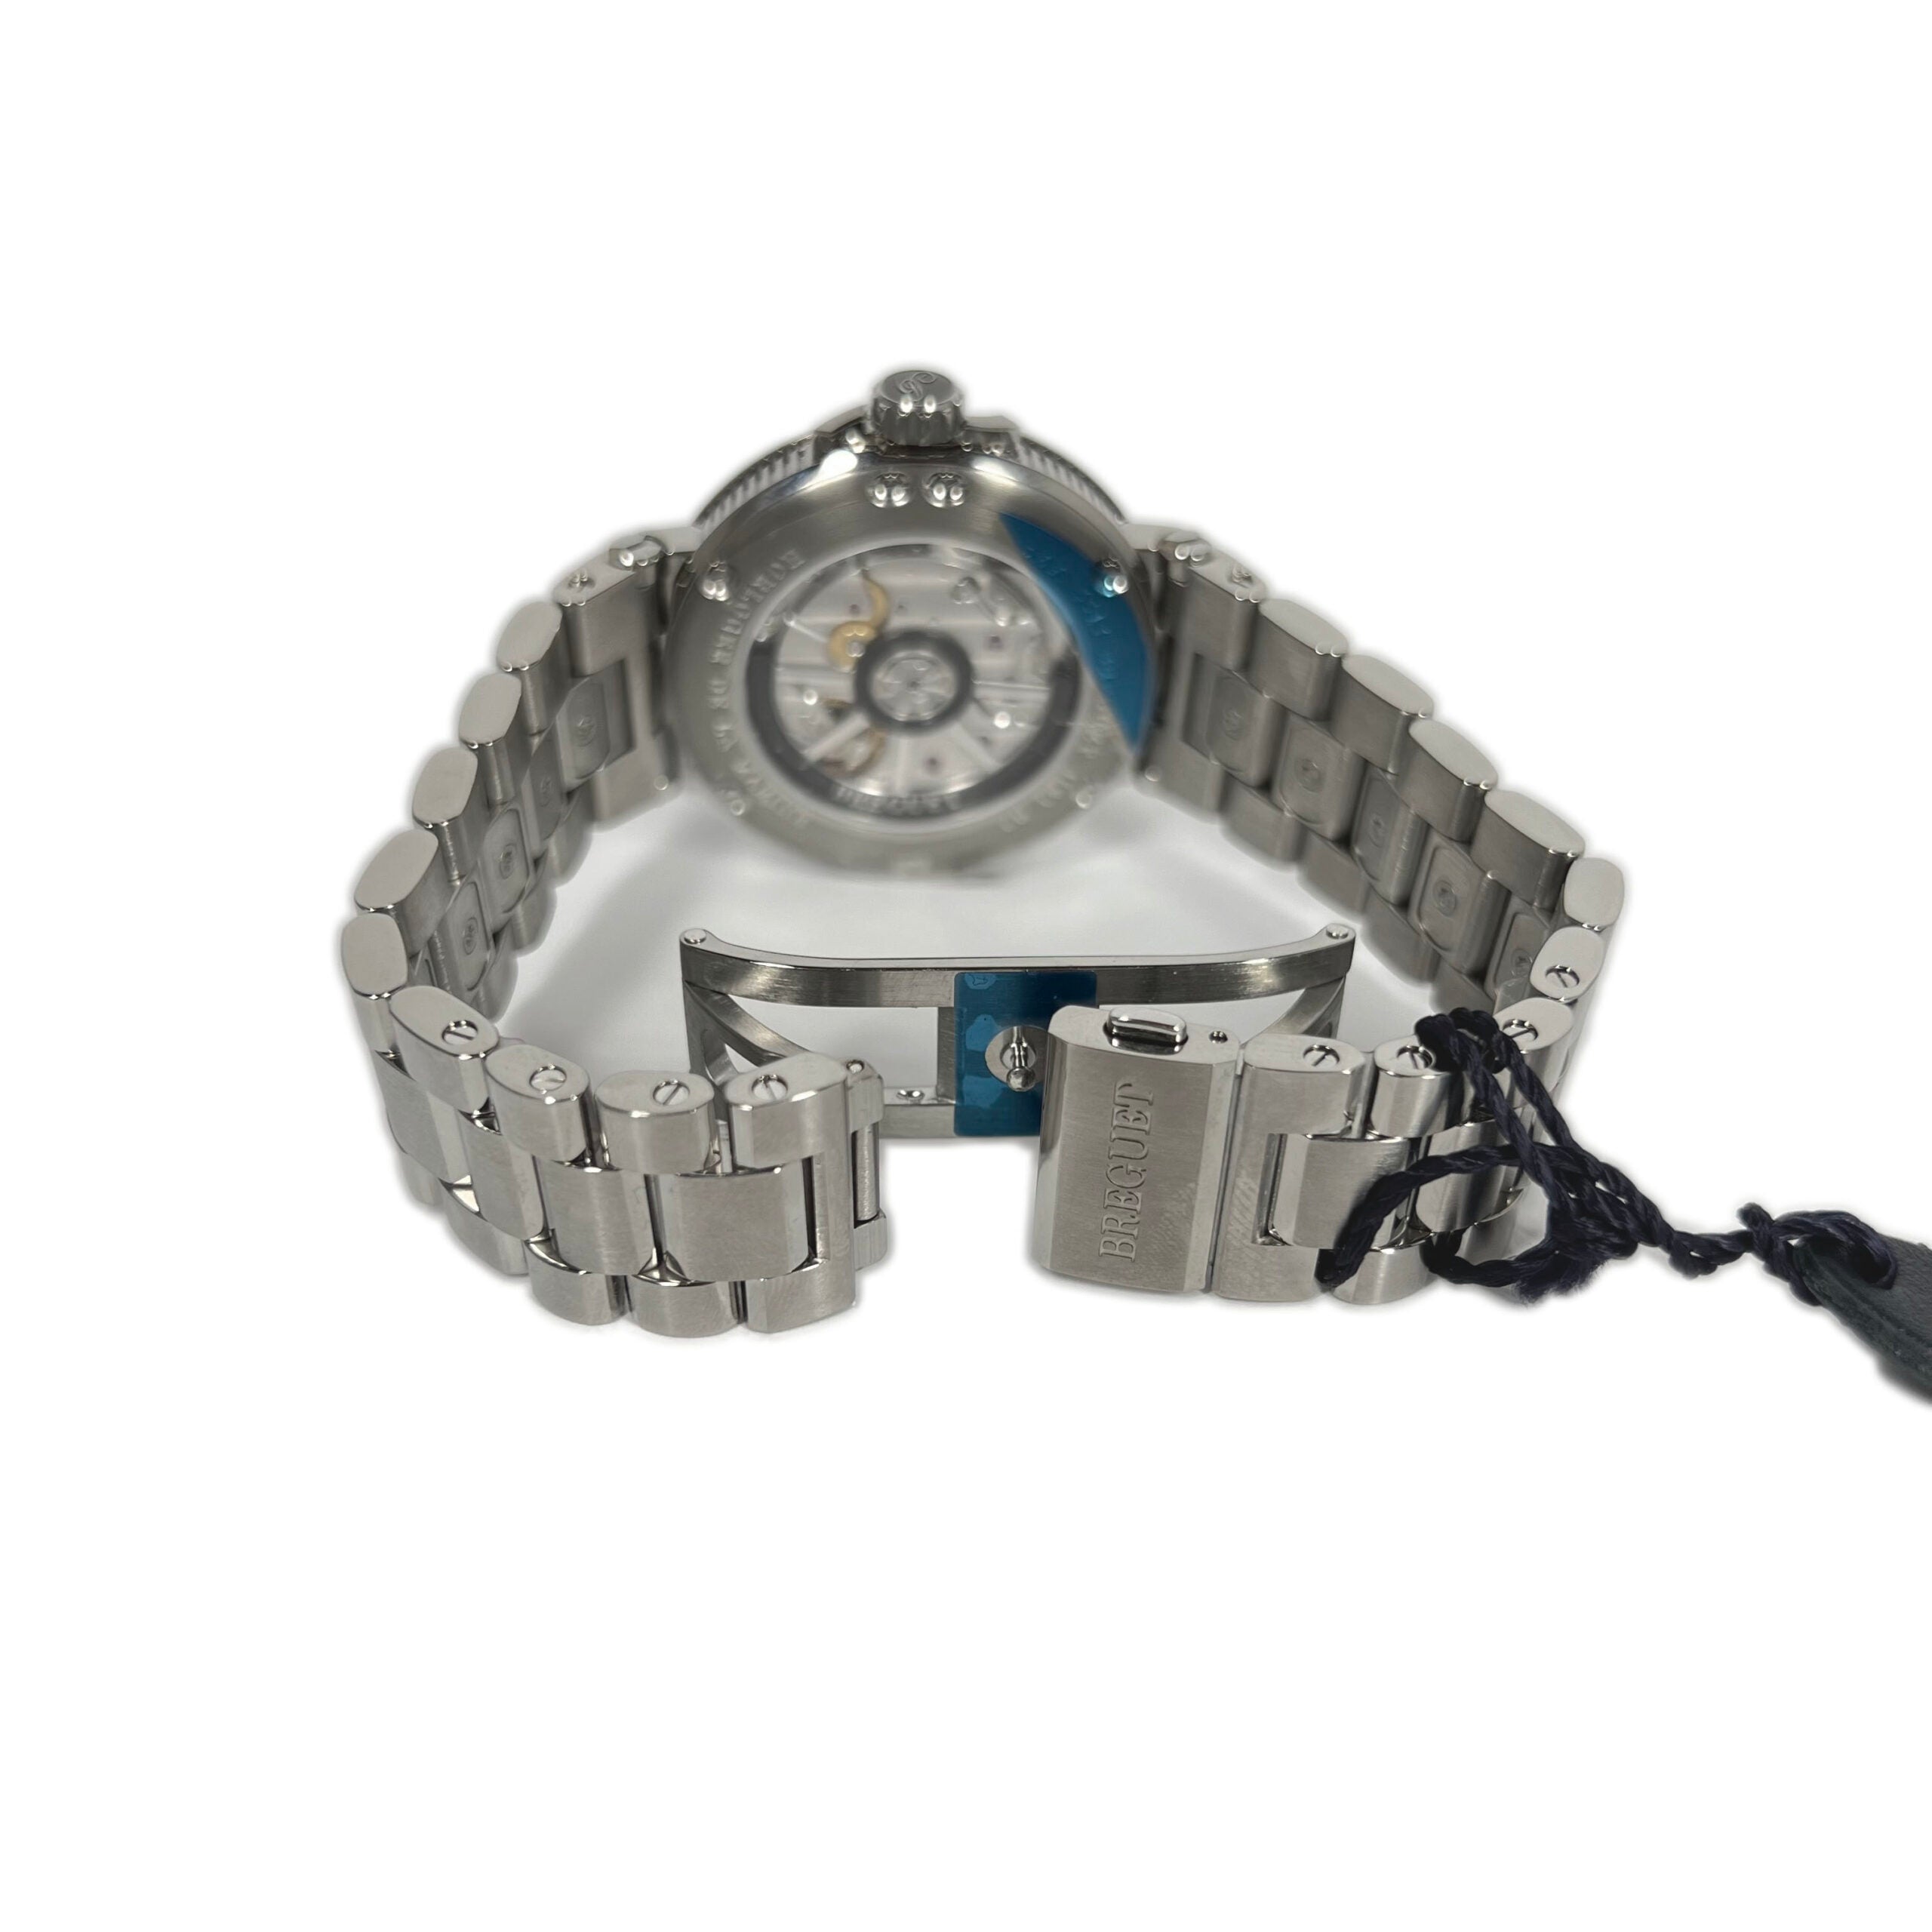 Breguet Marine 5517 Titanium Men's Watch